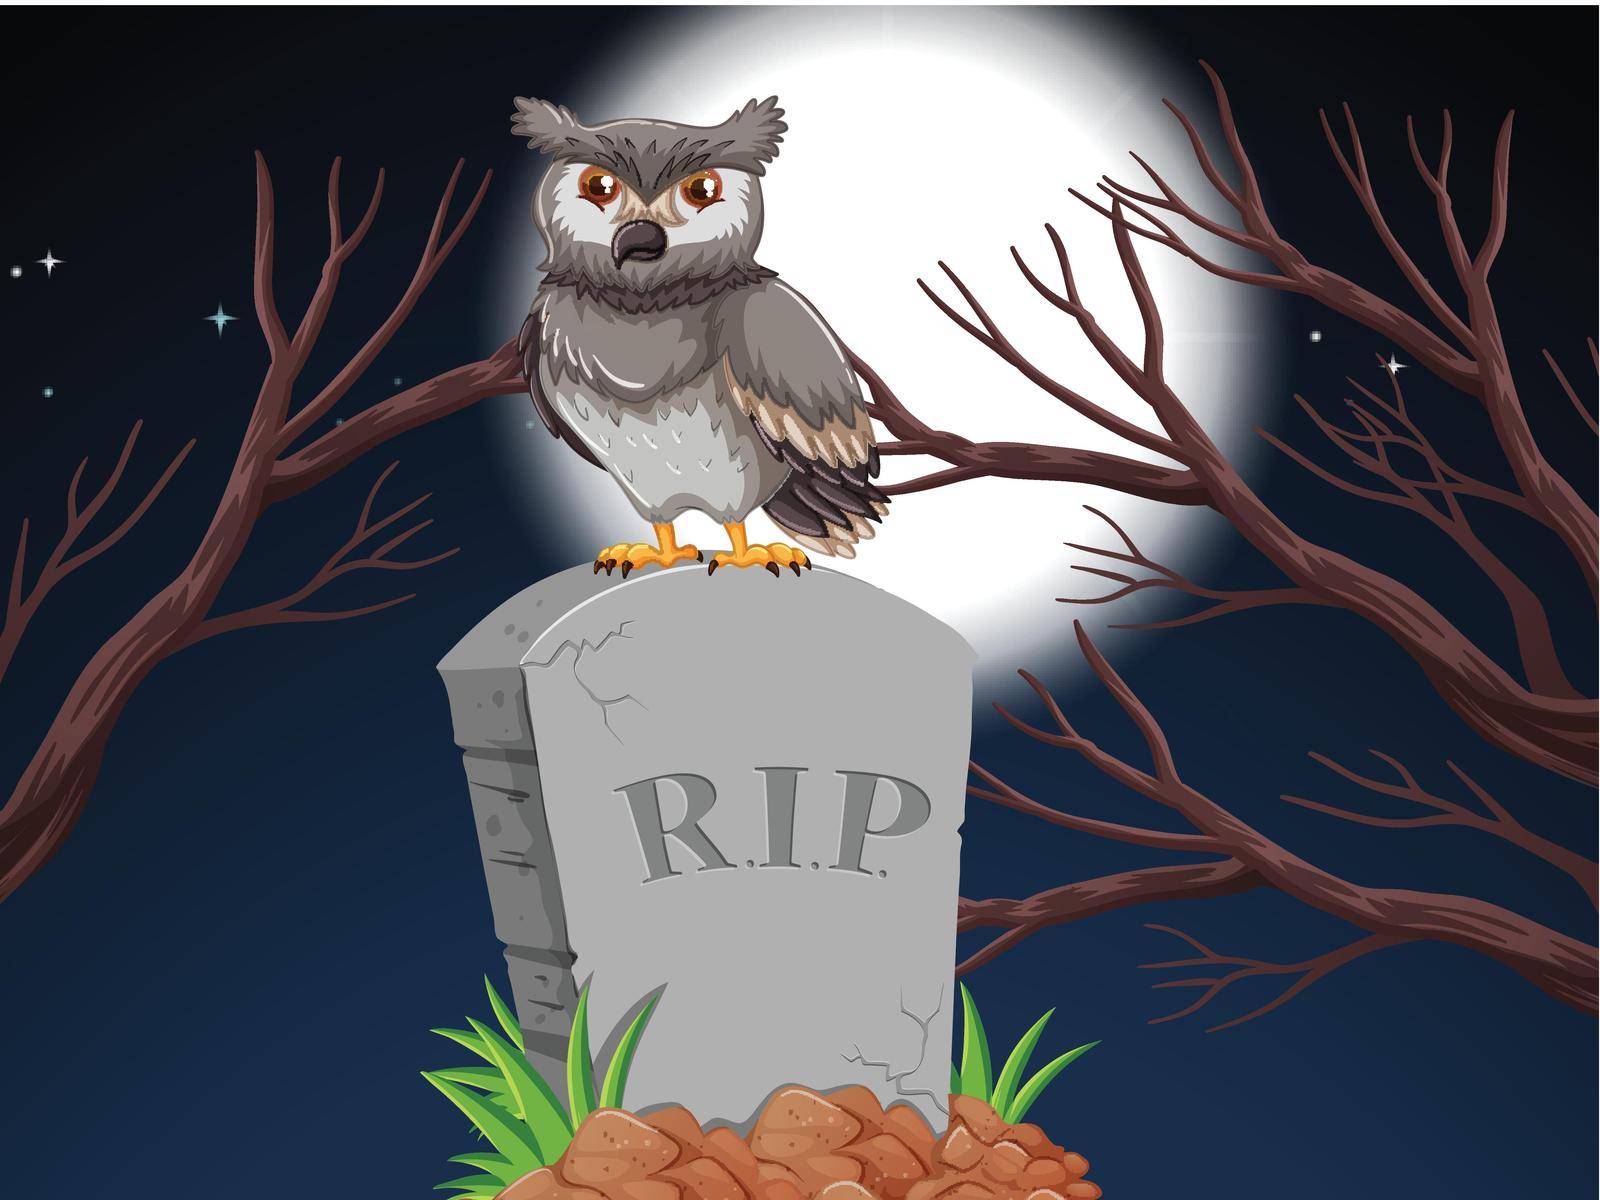 An owl on tombstone at night illustration